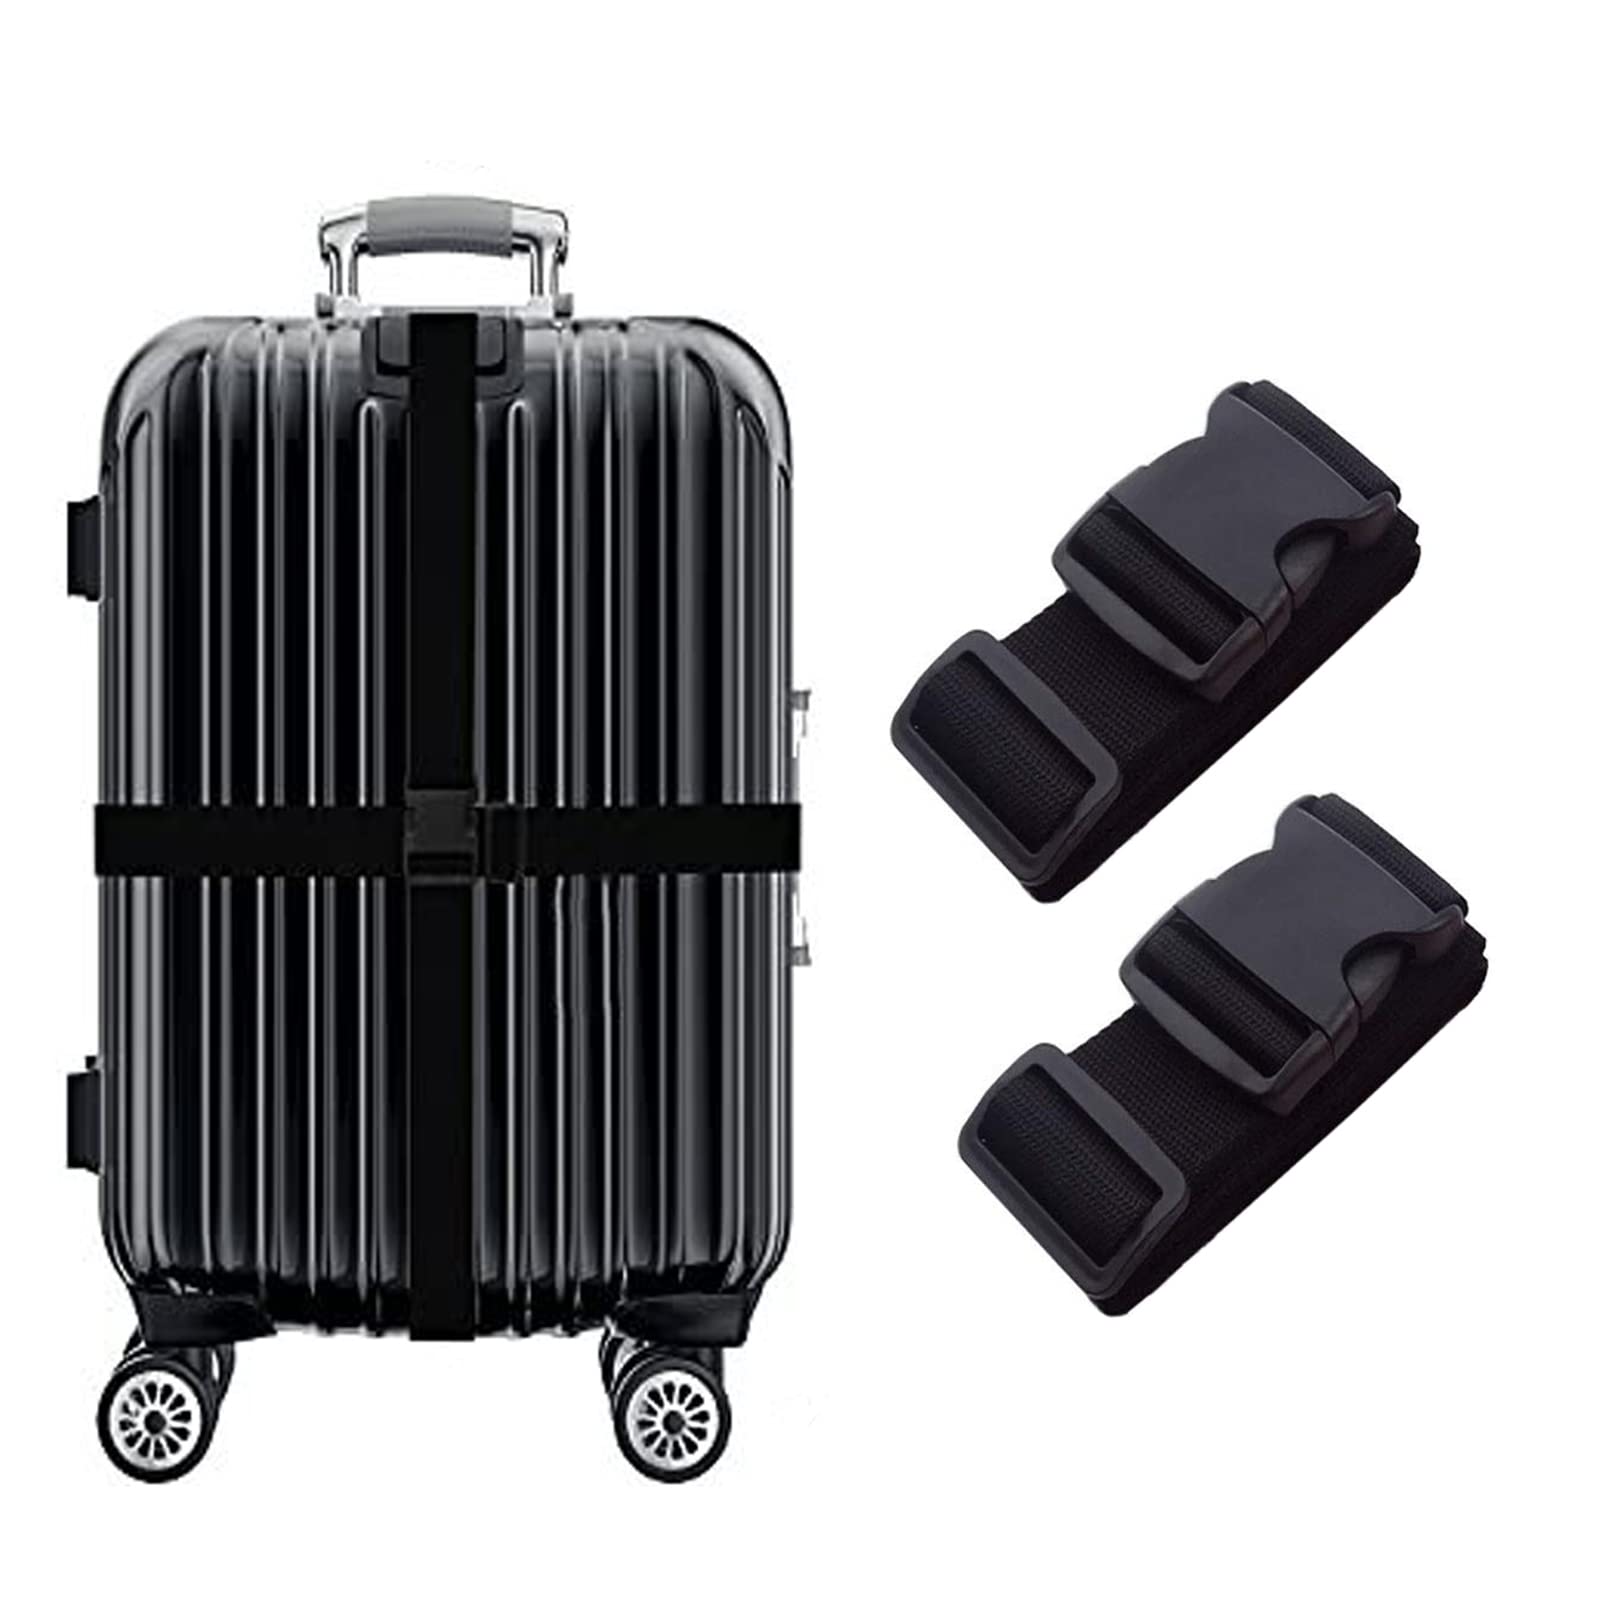 DFsucces スーツケースベルト ワンタッチ式 荷物固定 調節可能 荷崩れ防止 紛失防止 高弾性スーツケース留めベルト 旅行便利グッズ (ブラック-2本セット)